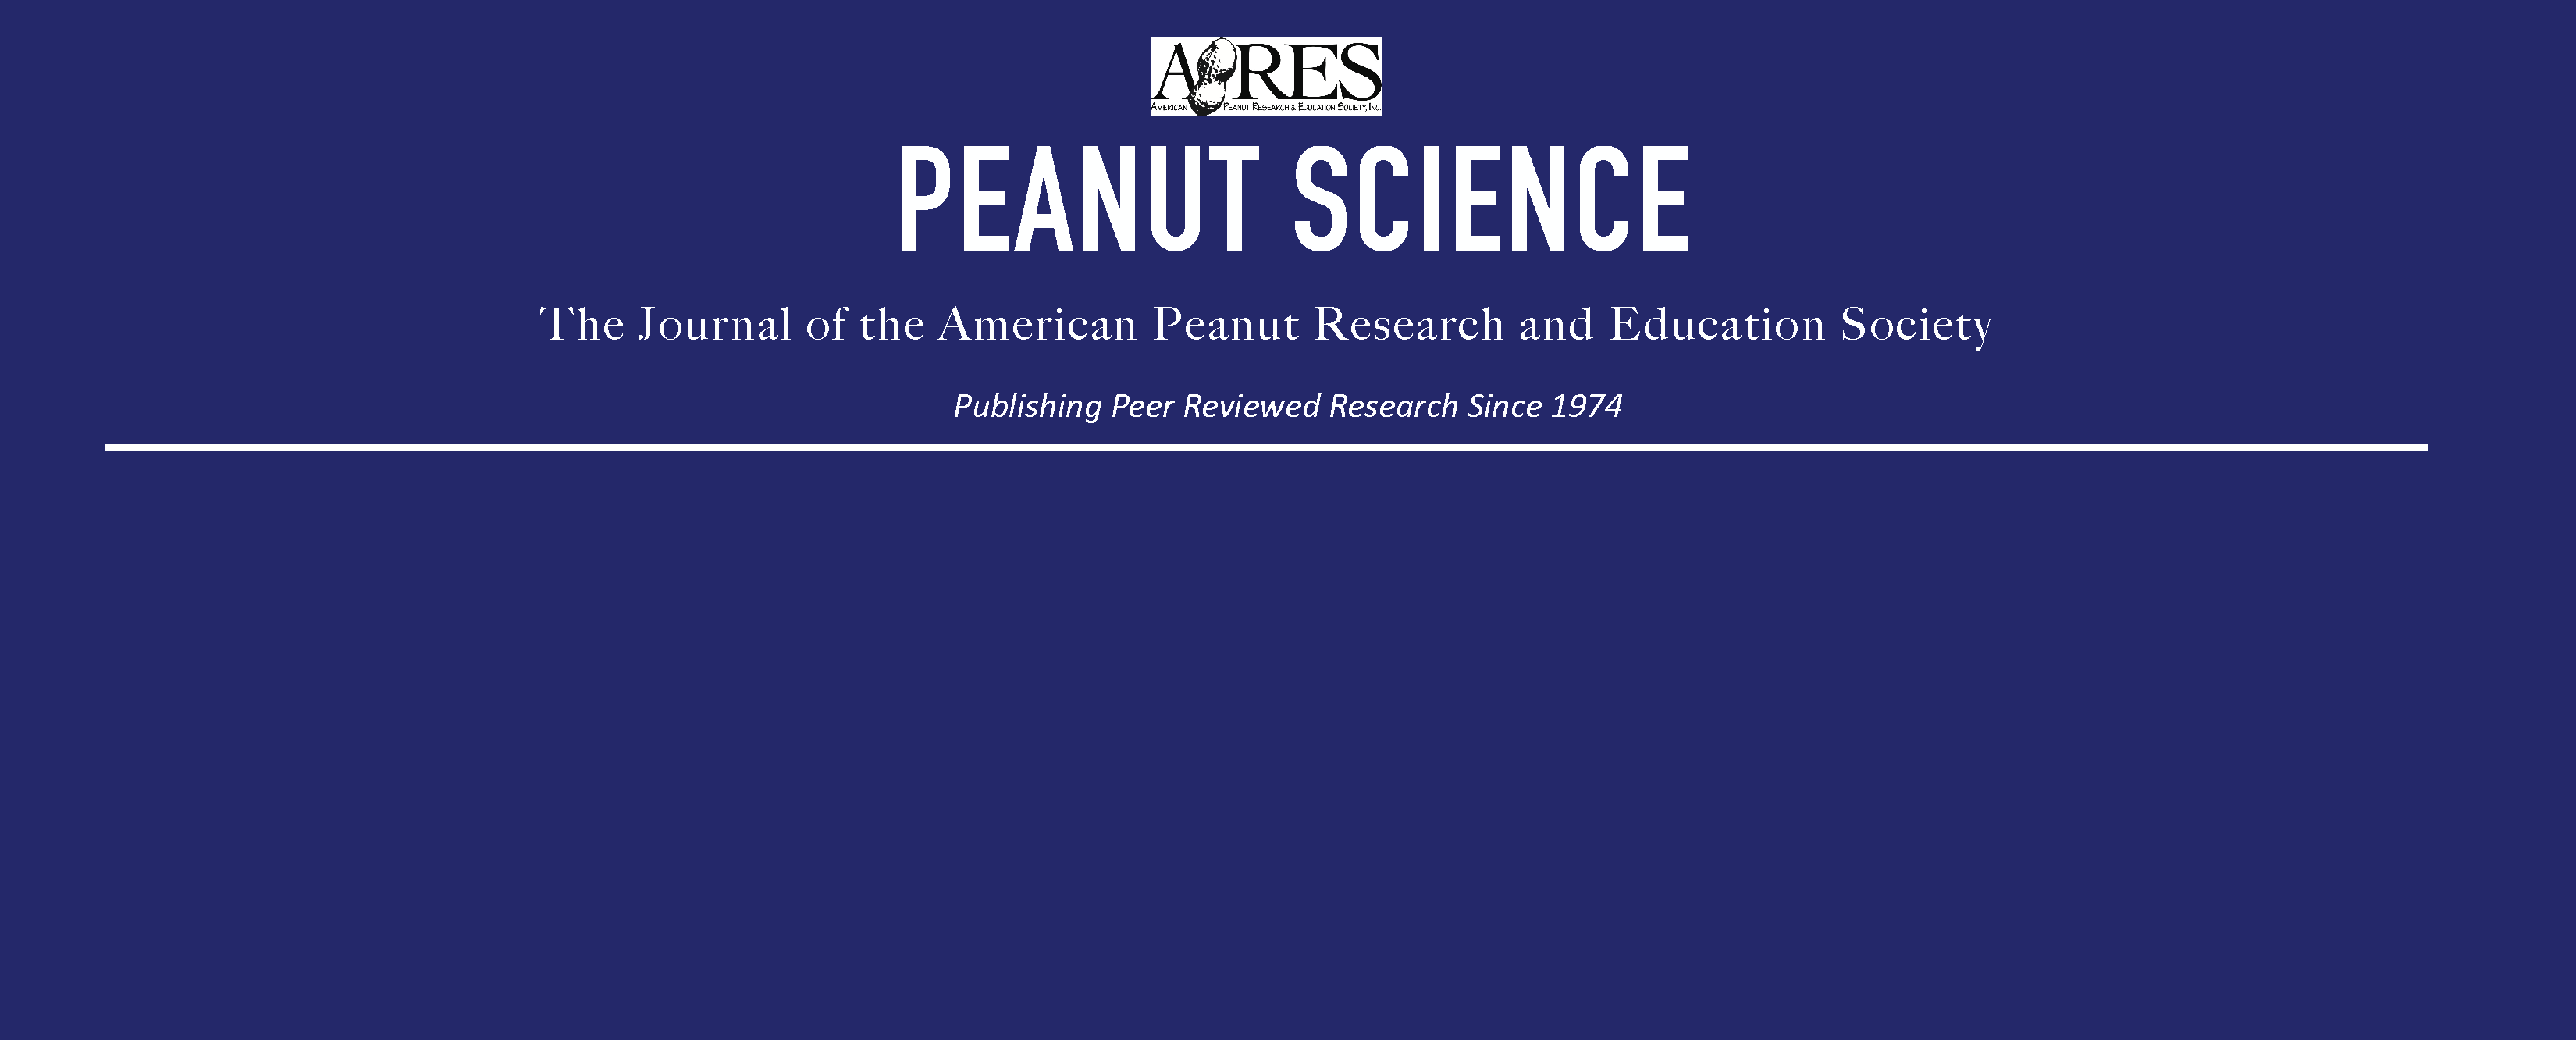 White Mold and Rhizoctonia Limb Rot Resistance among Advanced Georgia Peanut Breeding Lines¹